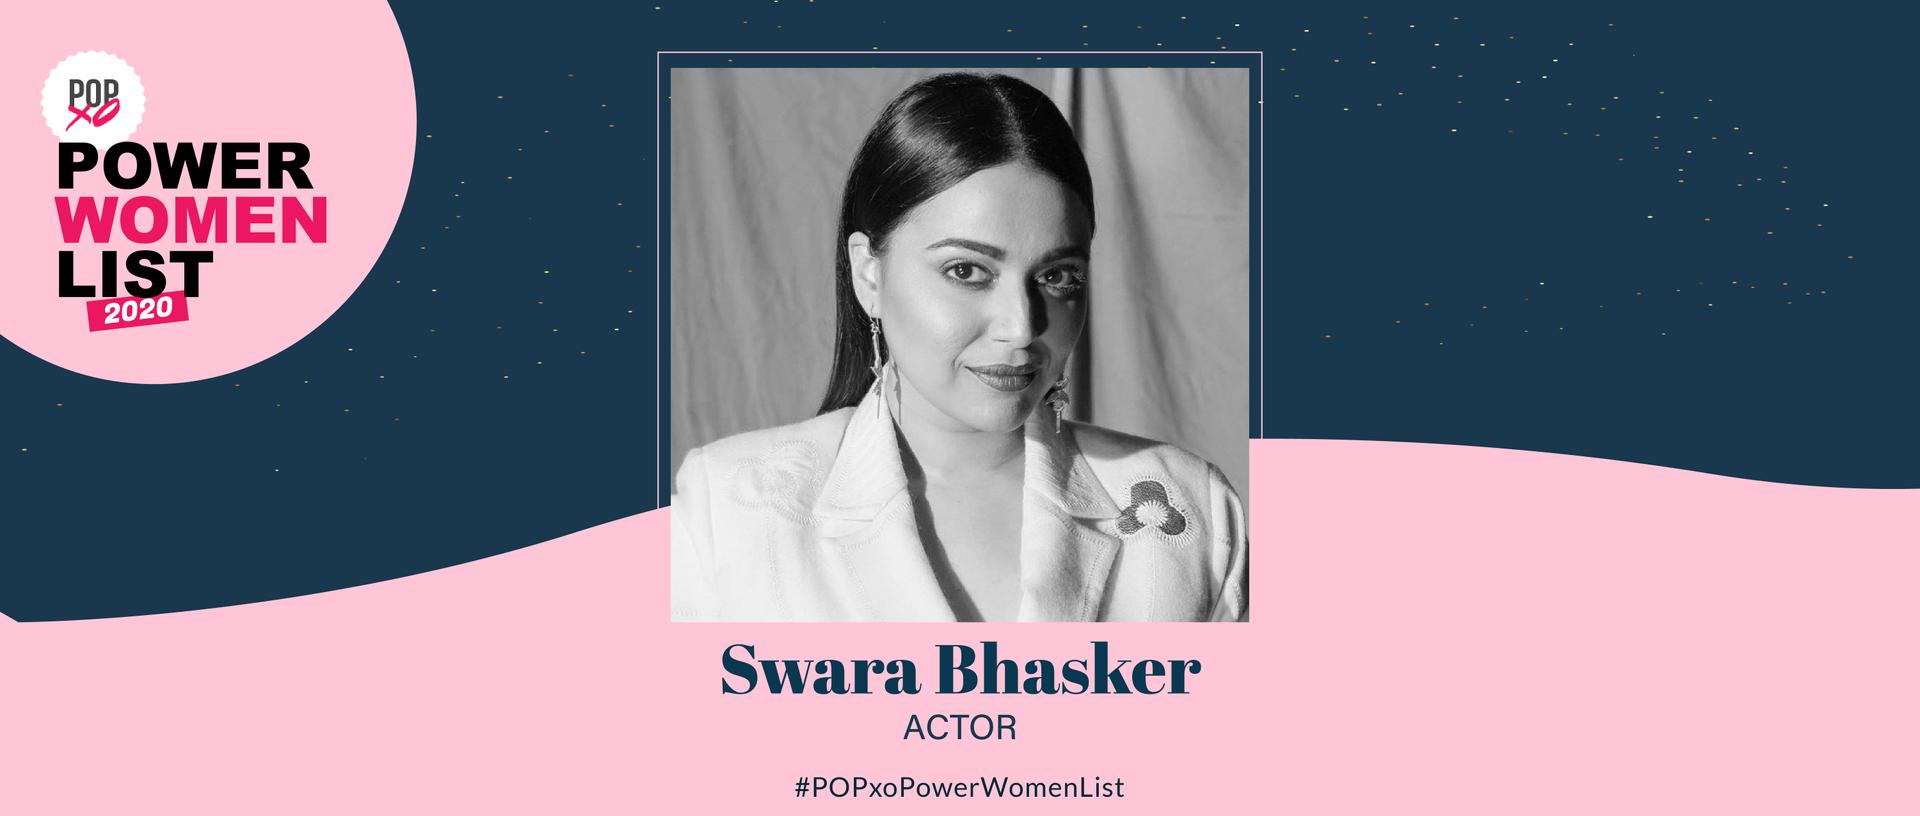 POPxo Power Women List 2020: Swara Bhasker, The Powerhouse With A Conscience